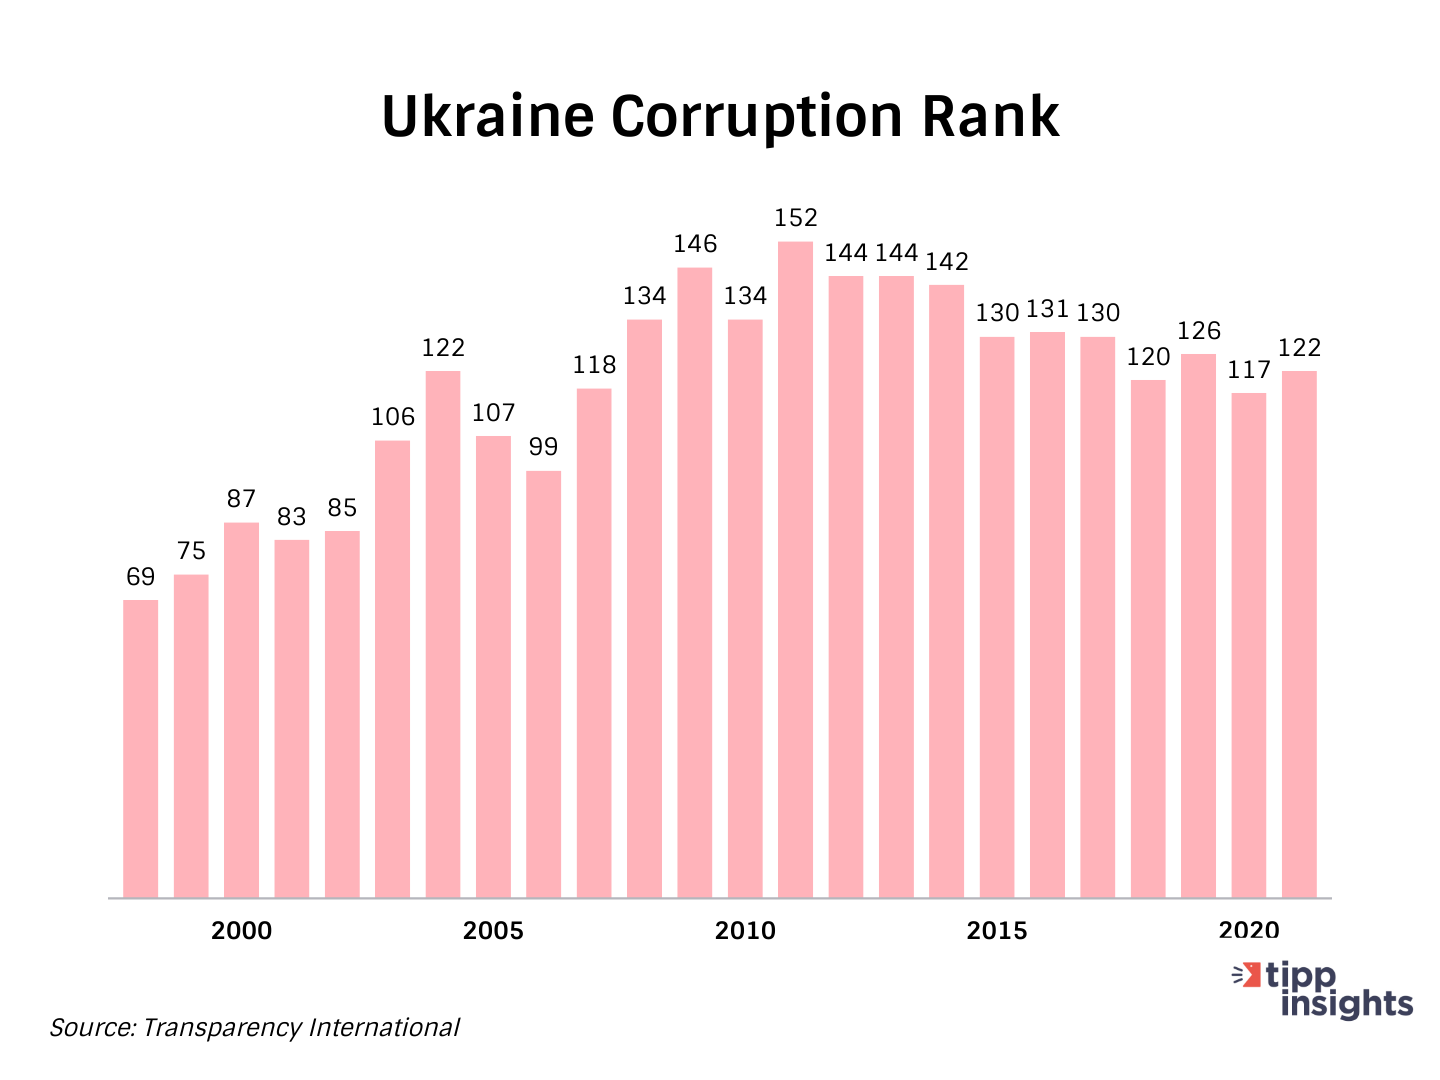 Ukraine Corruption Rank 2000 - 2020